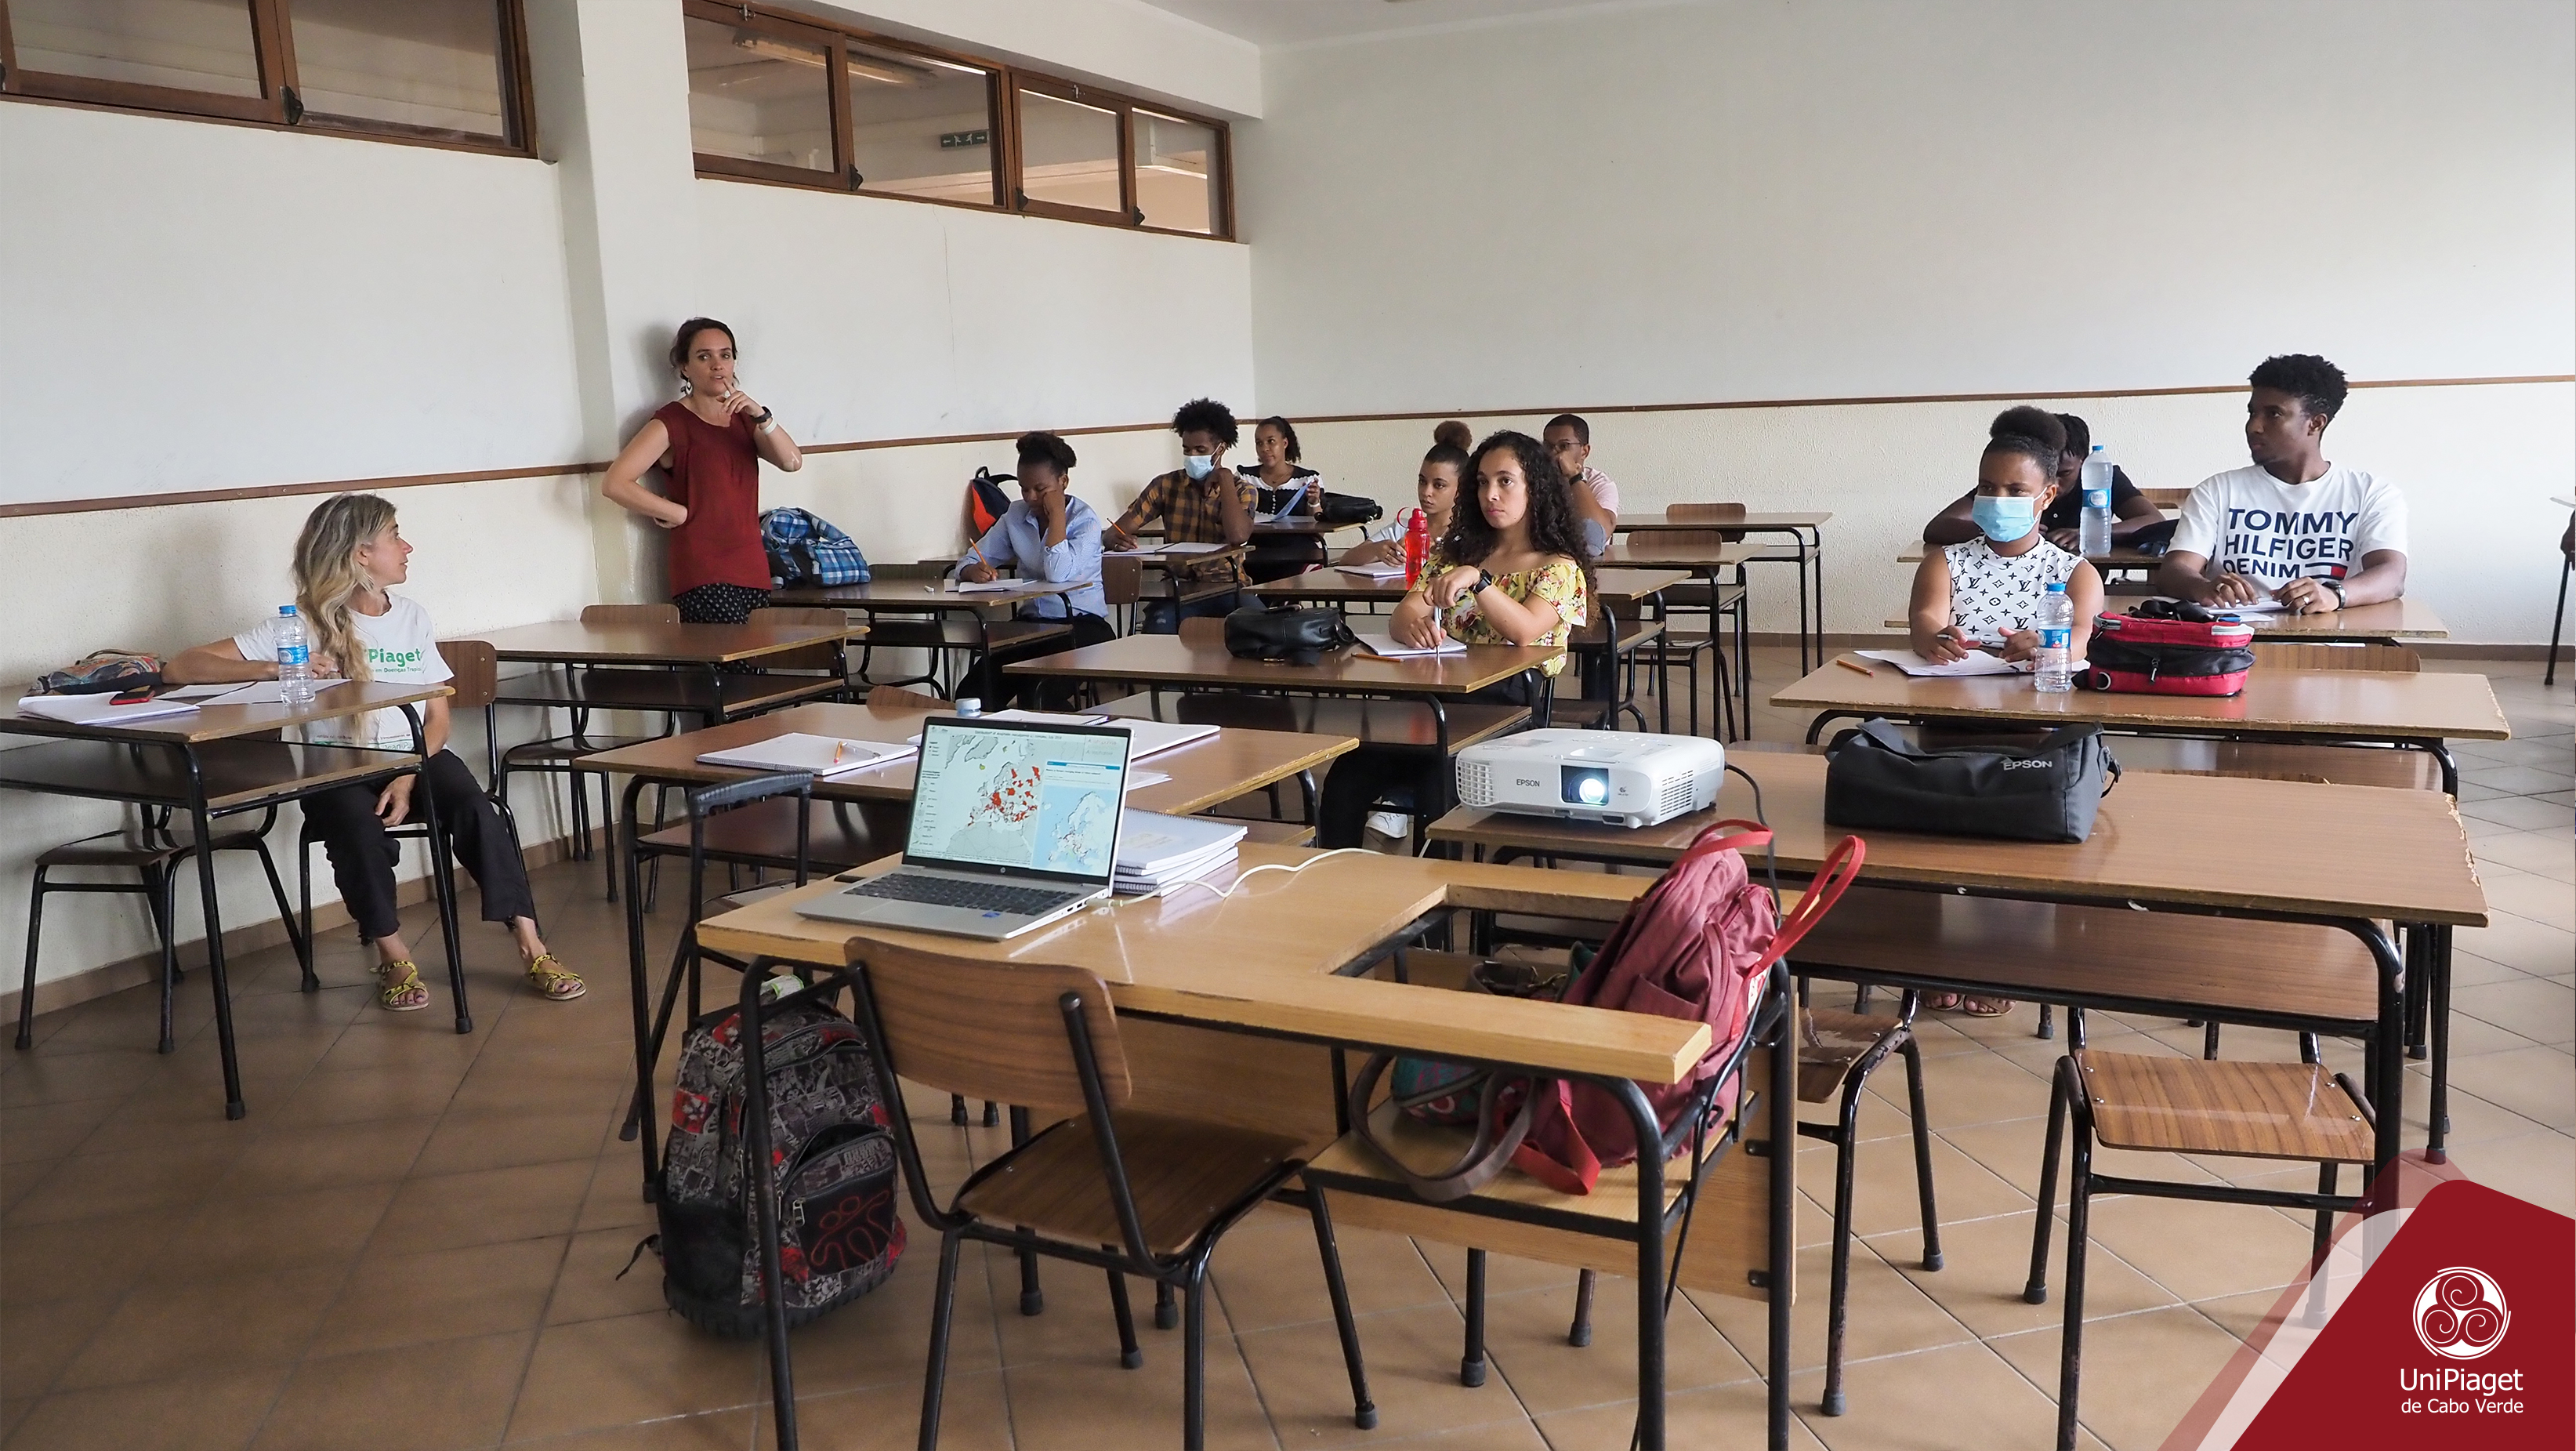 A Universidade - Universidade Jean Piaget de Cabo Verde